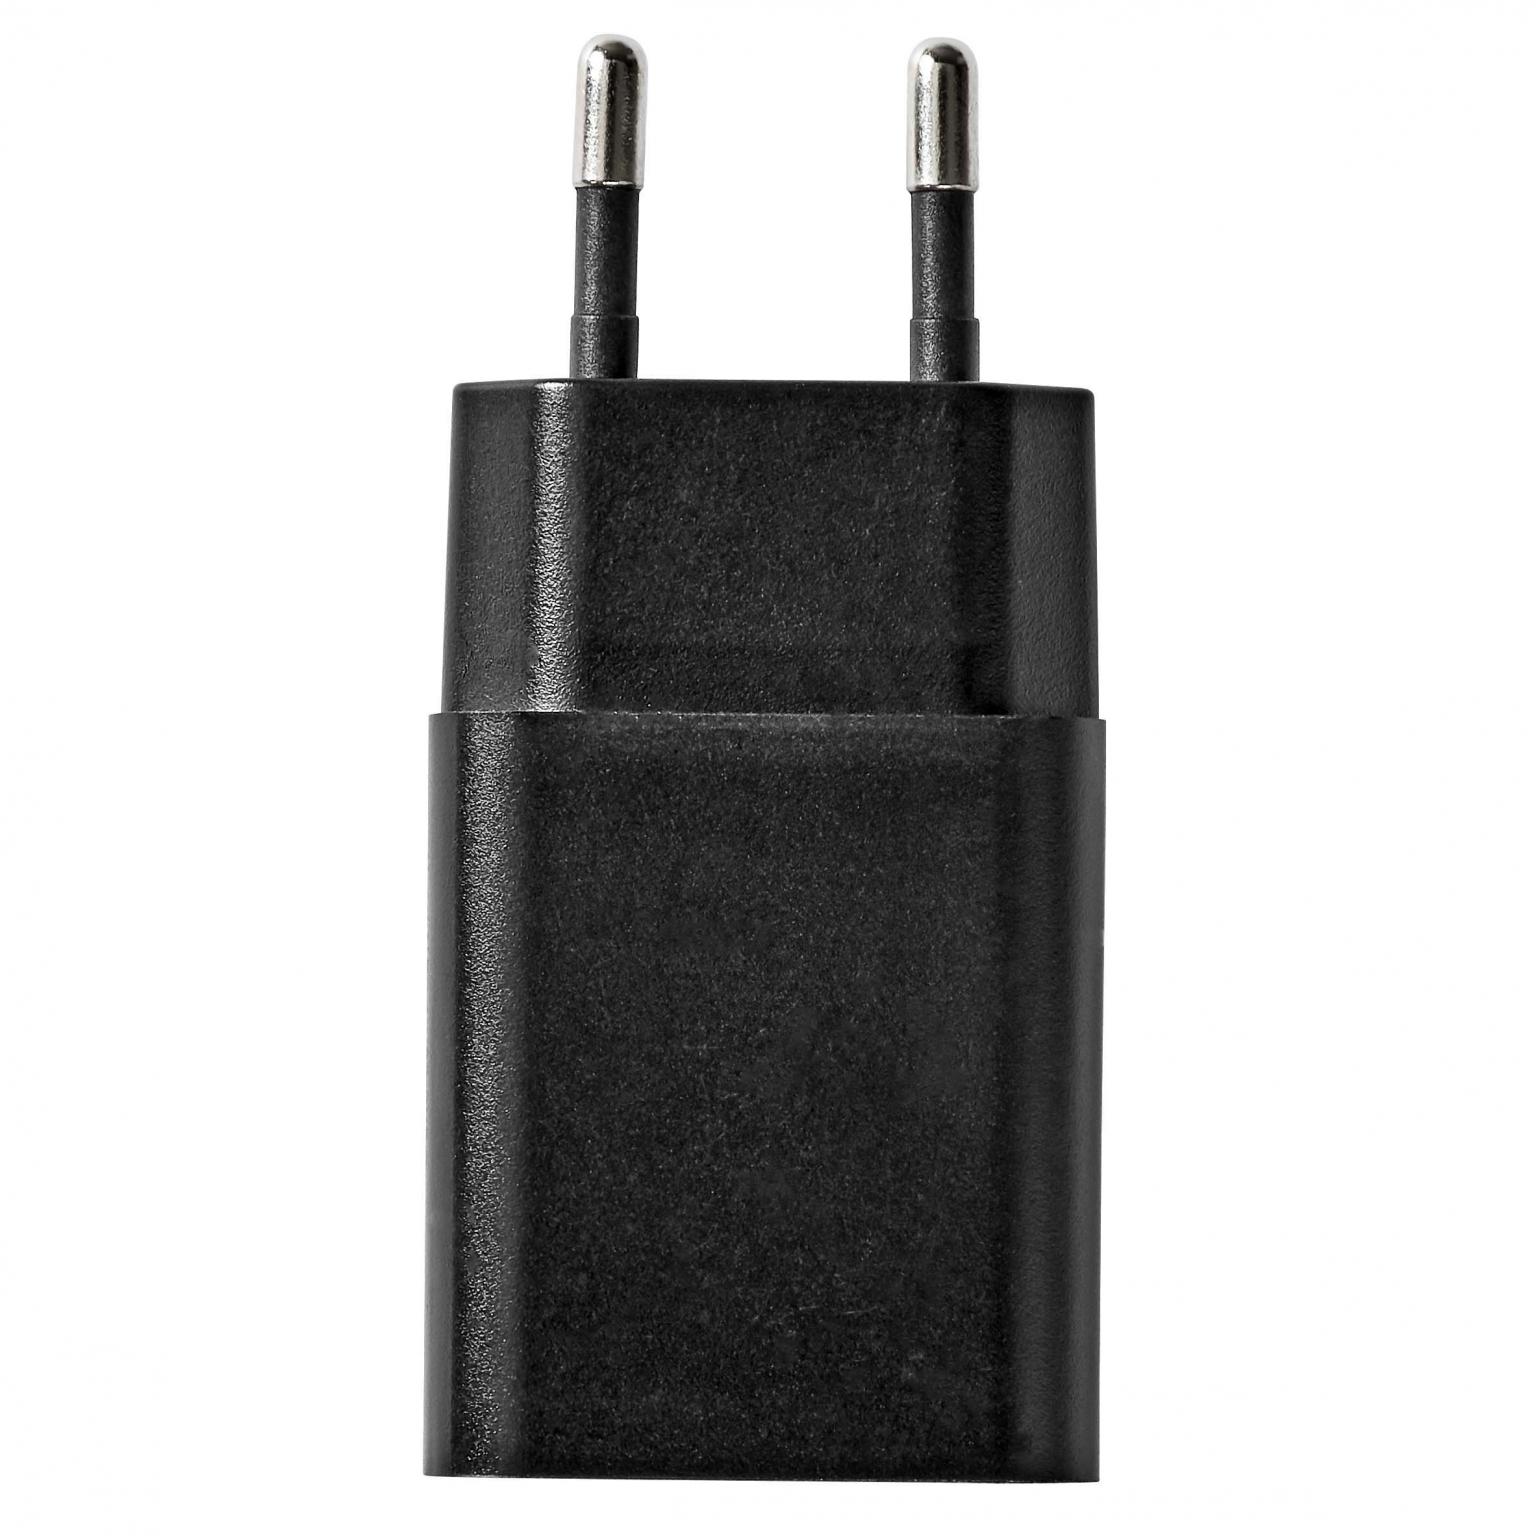 USB oplader - Aansluiting 1: Euro-stekker male, Aansluiting 2: USB A  female, Vermogen: 5 Watt Laadsstroom: 1000 mA.